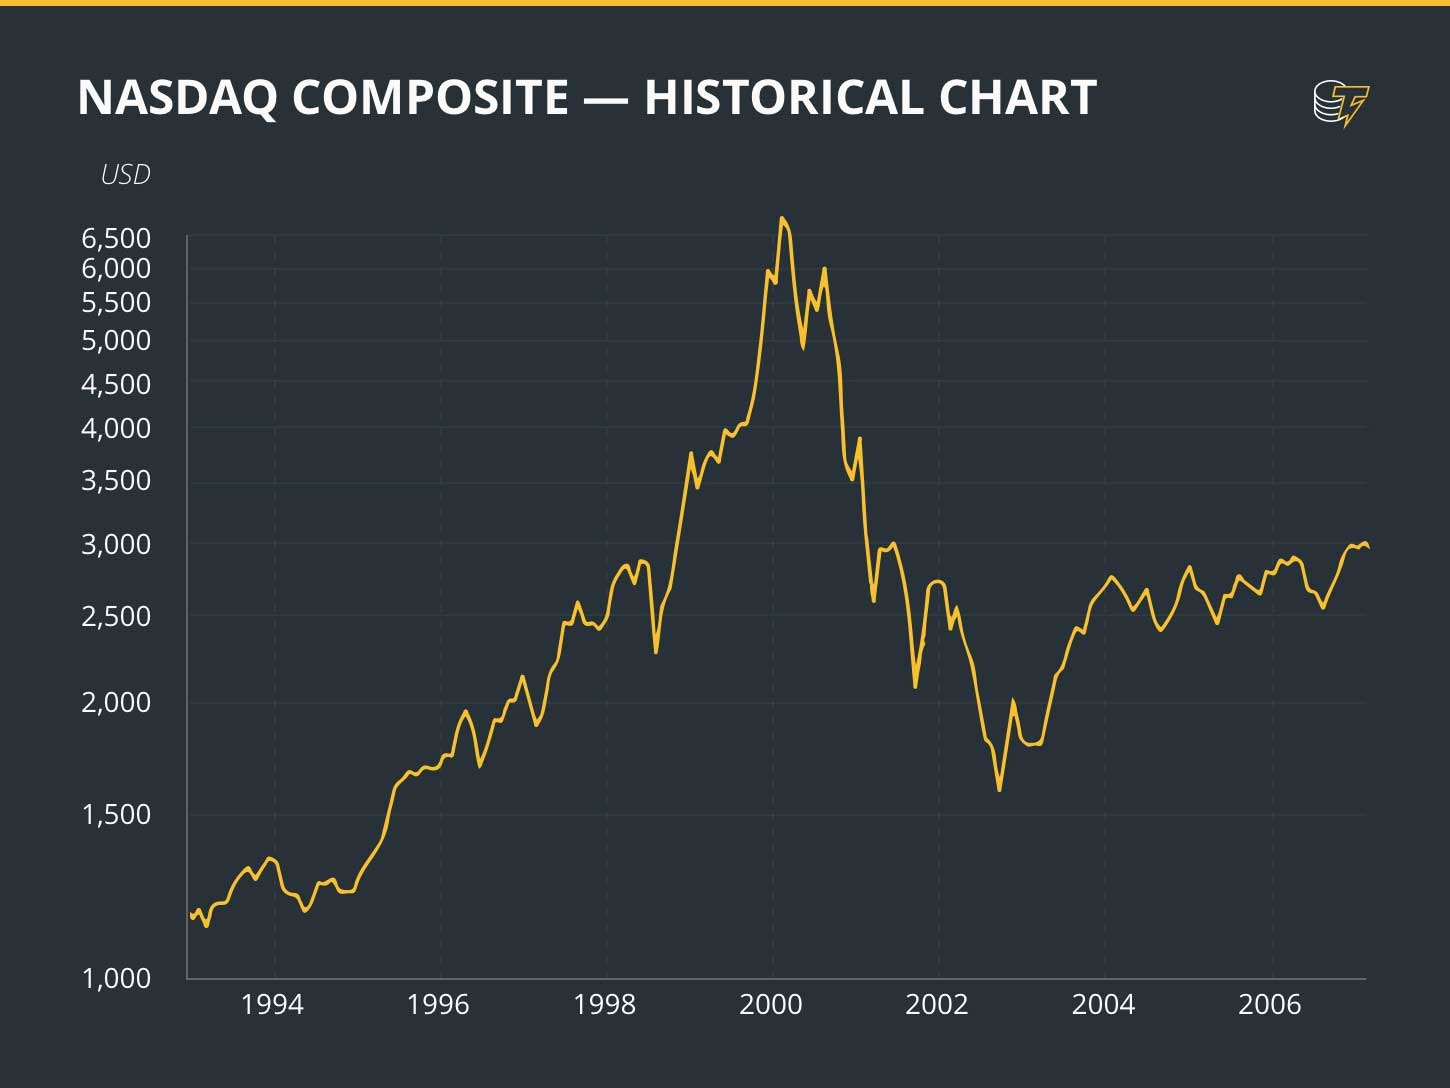 A graph indicating the NASDAQ crash during the dot-com bubble